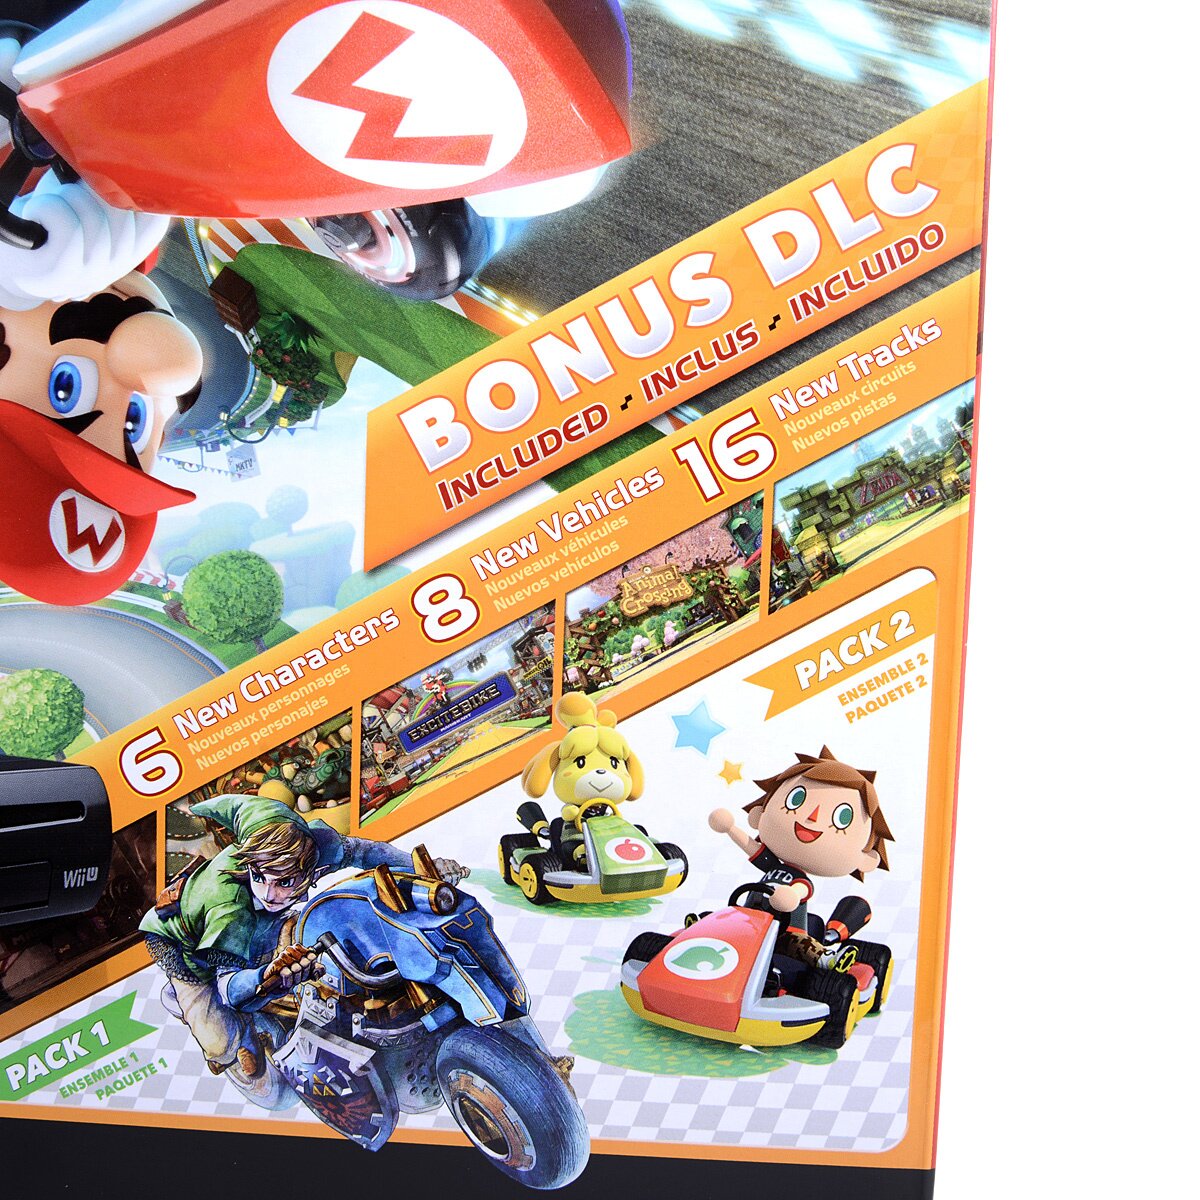 Wii U Console Deluxe: Mario Kart 8 Edition Prices Wii U